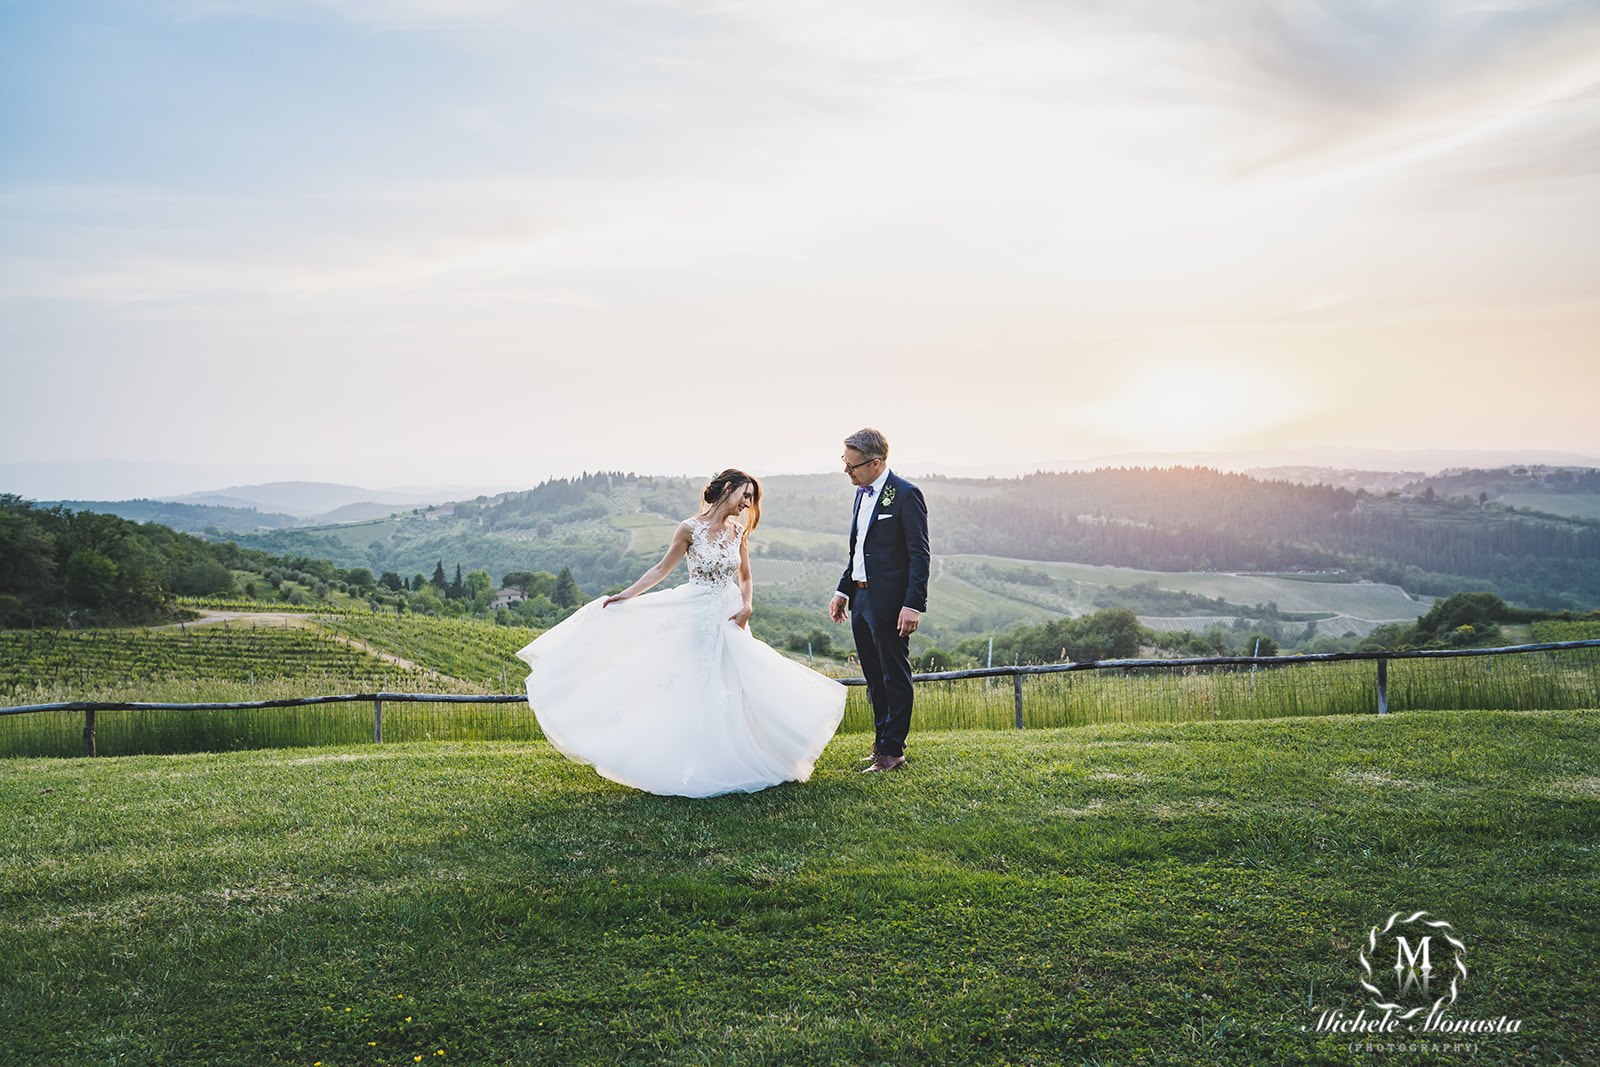 Katharina & Michael - Wedding in an Italian Borgo